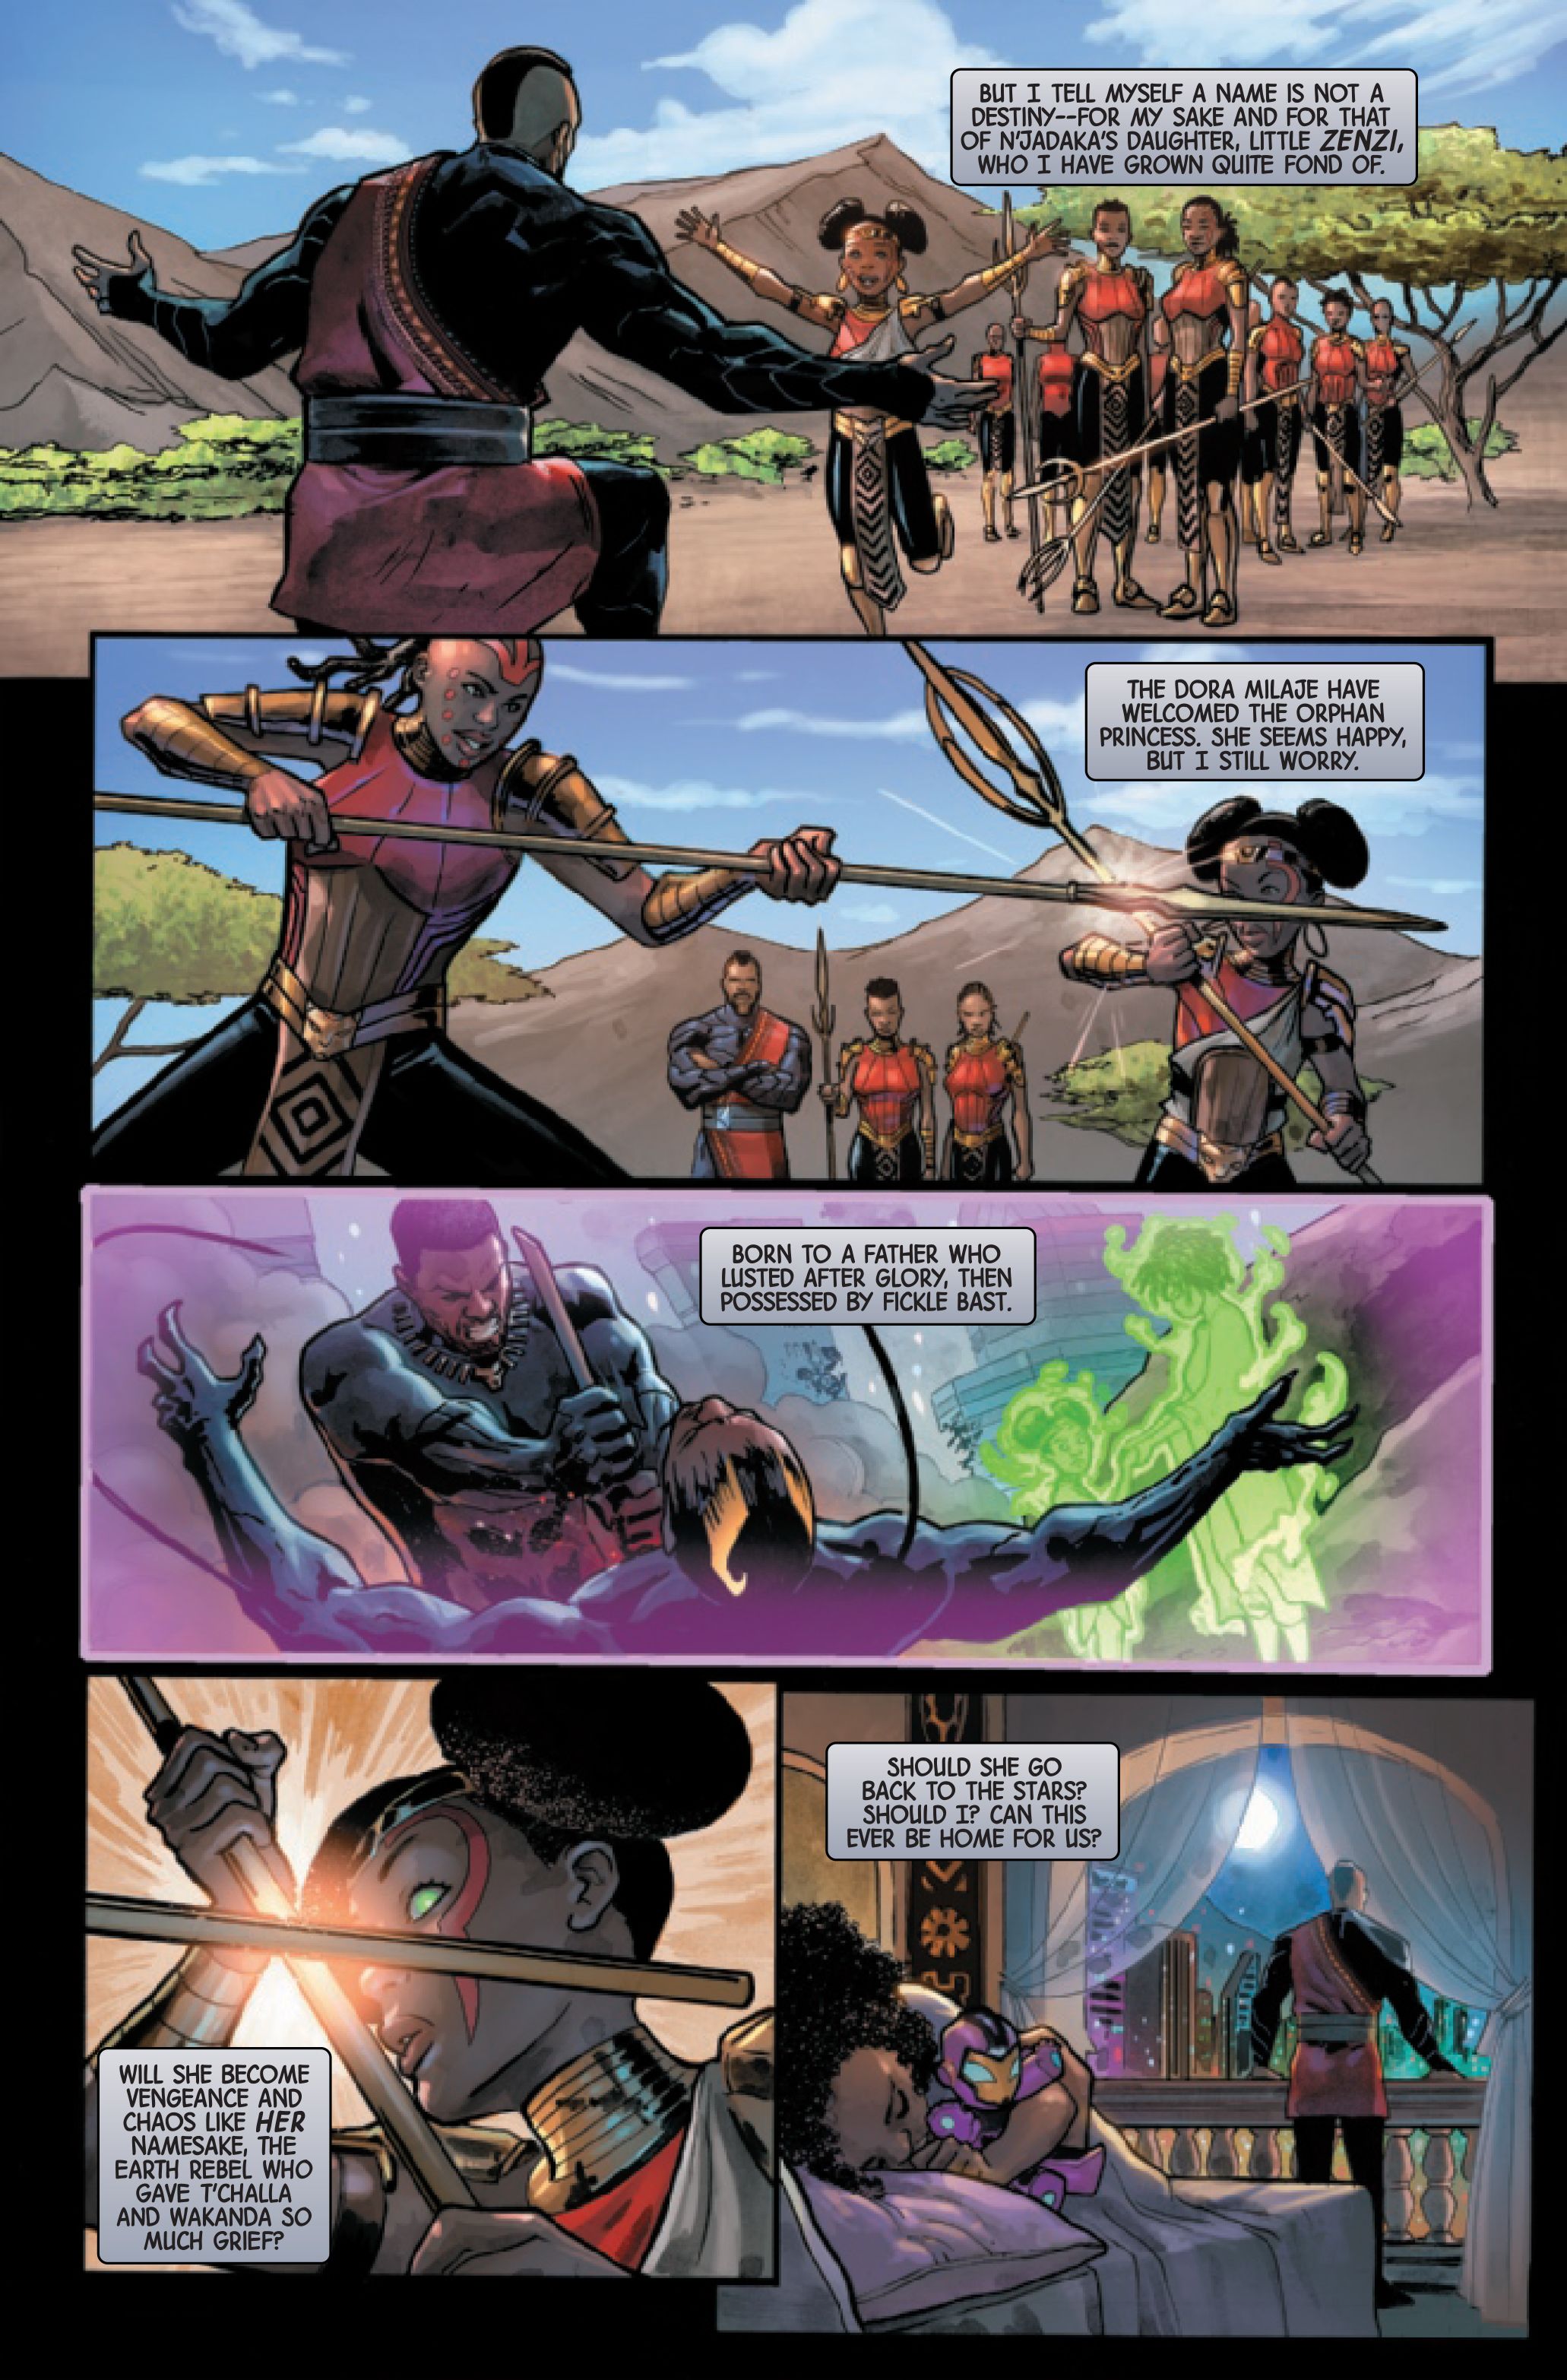 Page 3 of The Last Annihilation: Wakanda #1, by Evan Narcisse, Germán Peralta, Jesus Aburtov and VC's Cory Petit